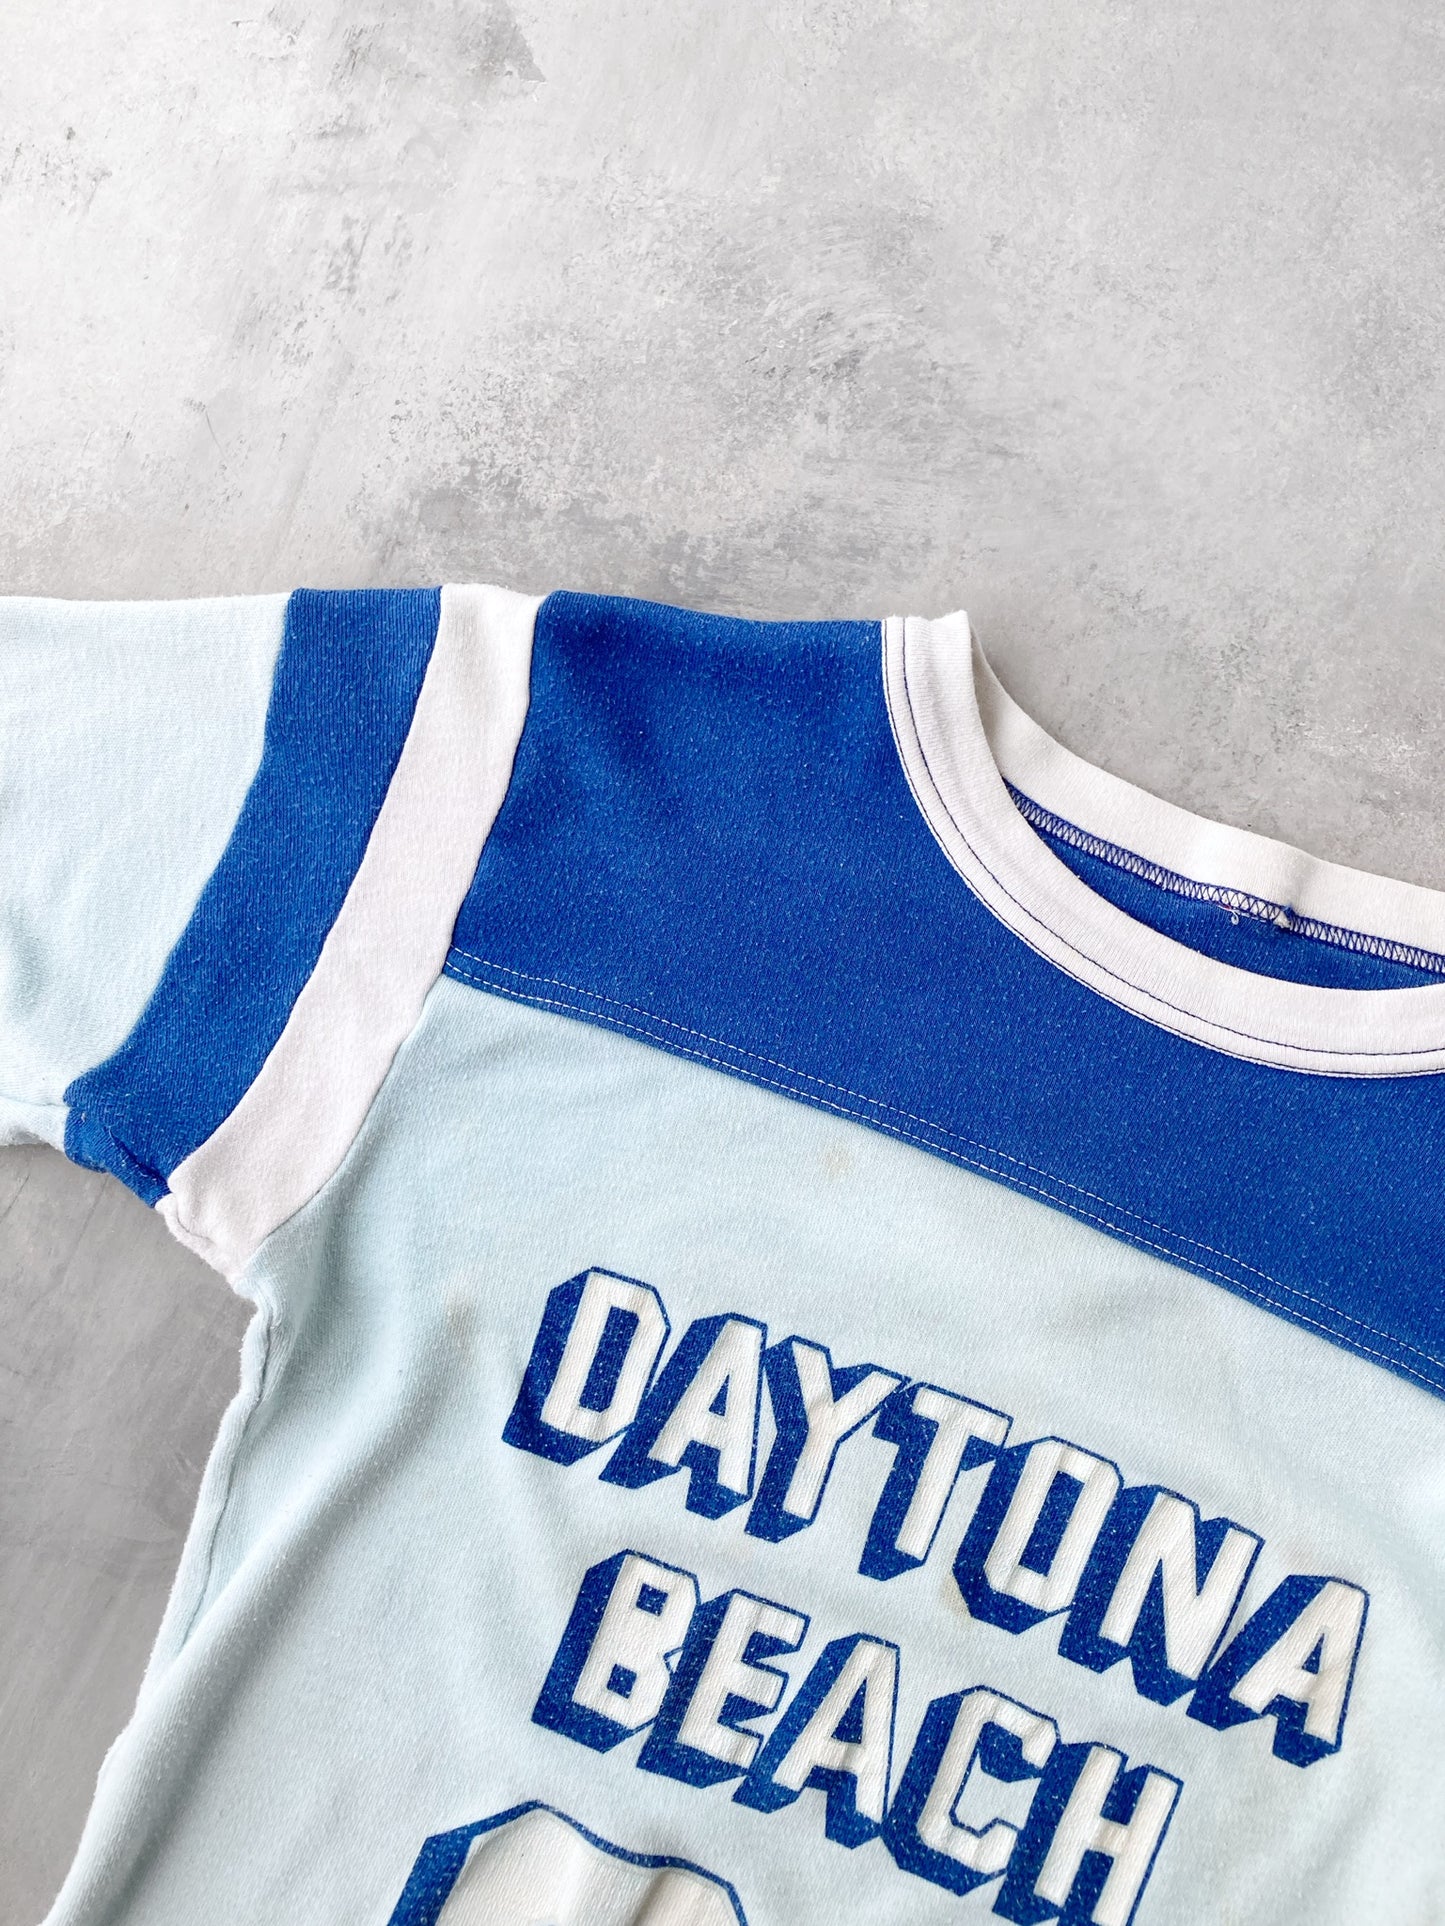 Daytona Beach T-Shirt '82 - Small